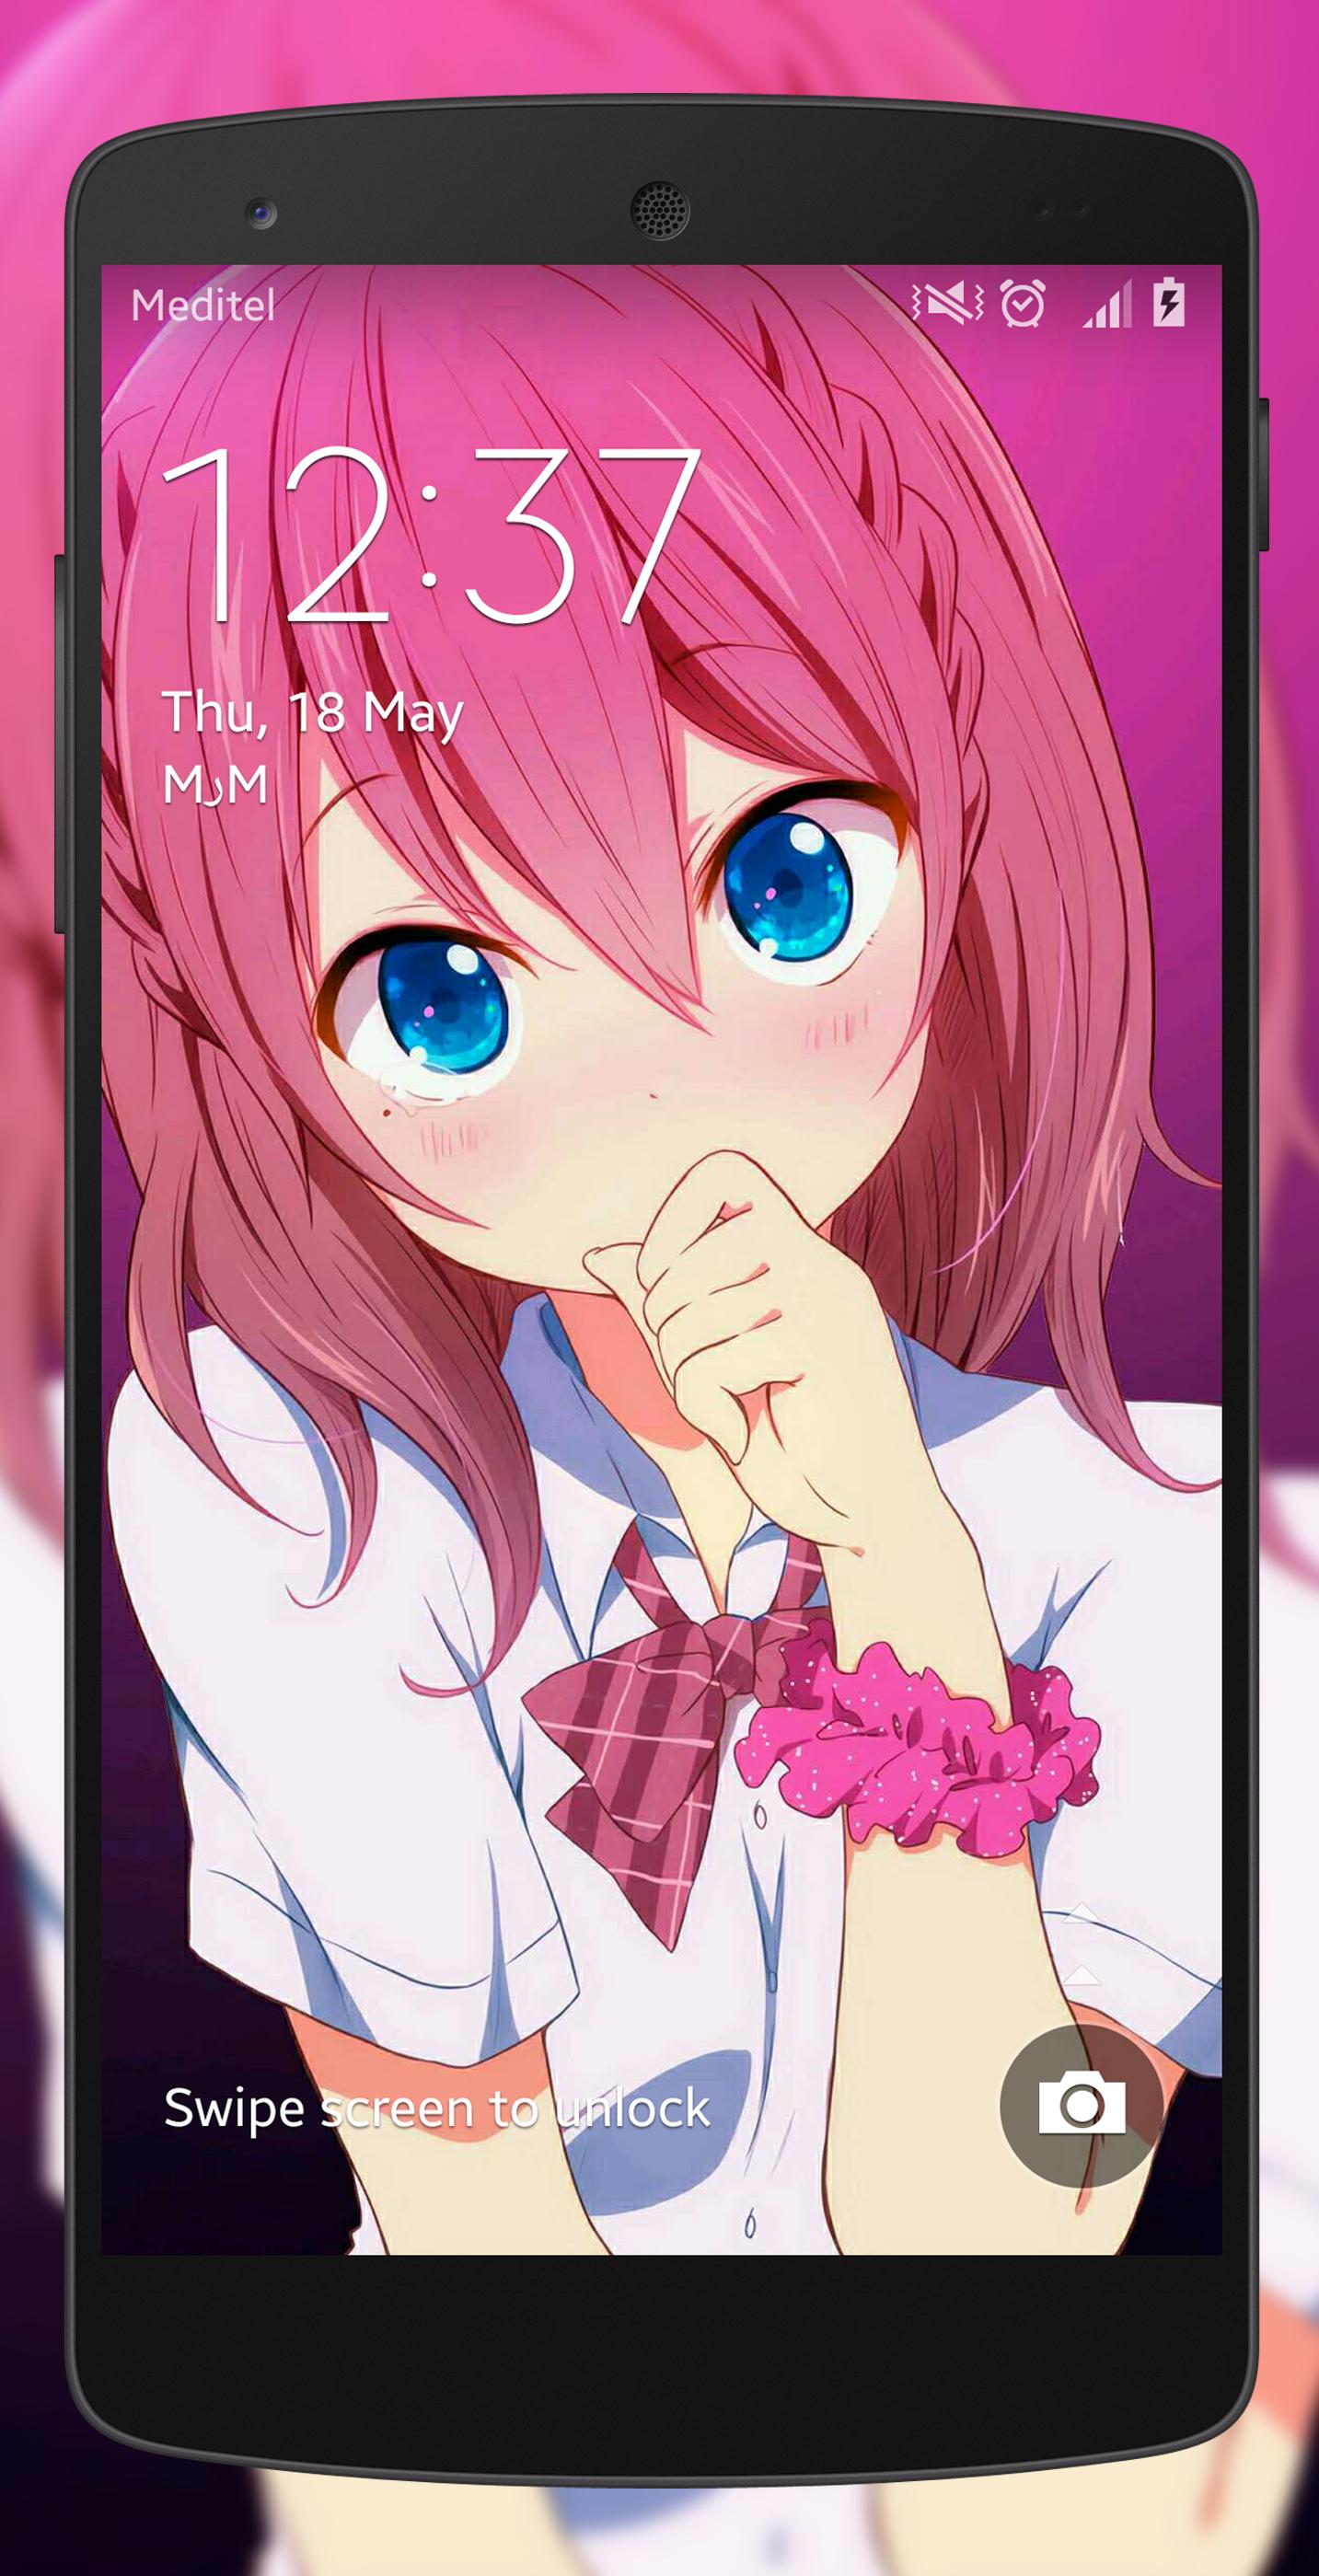 40 Gambar Wallpaper Android Anime Kawaii terbaru 2020